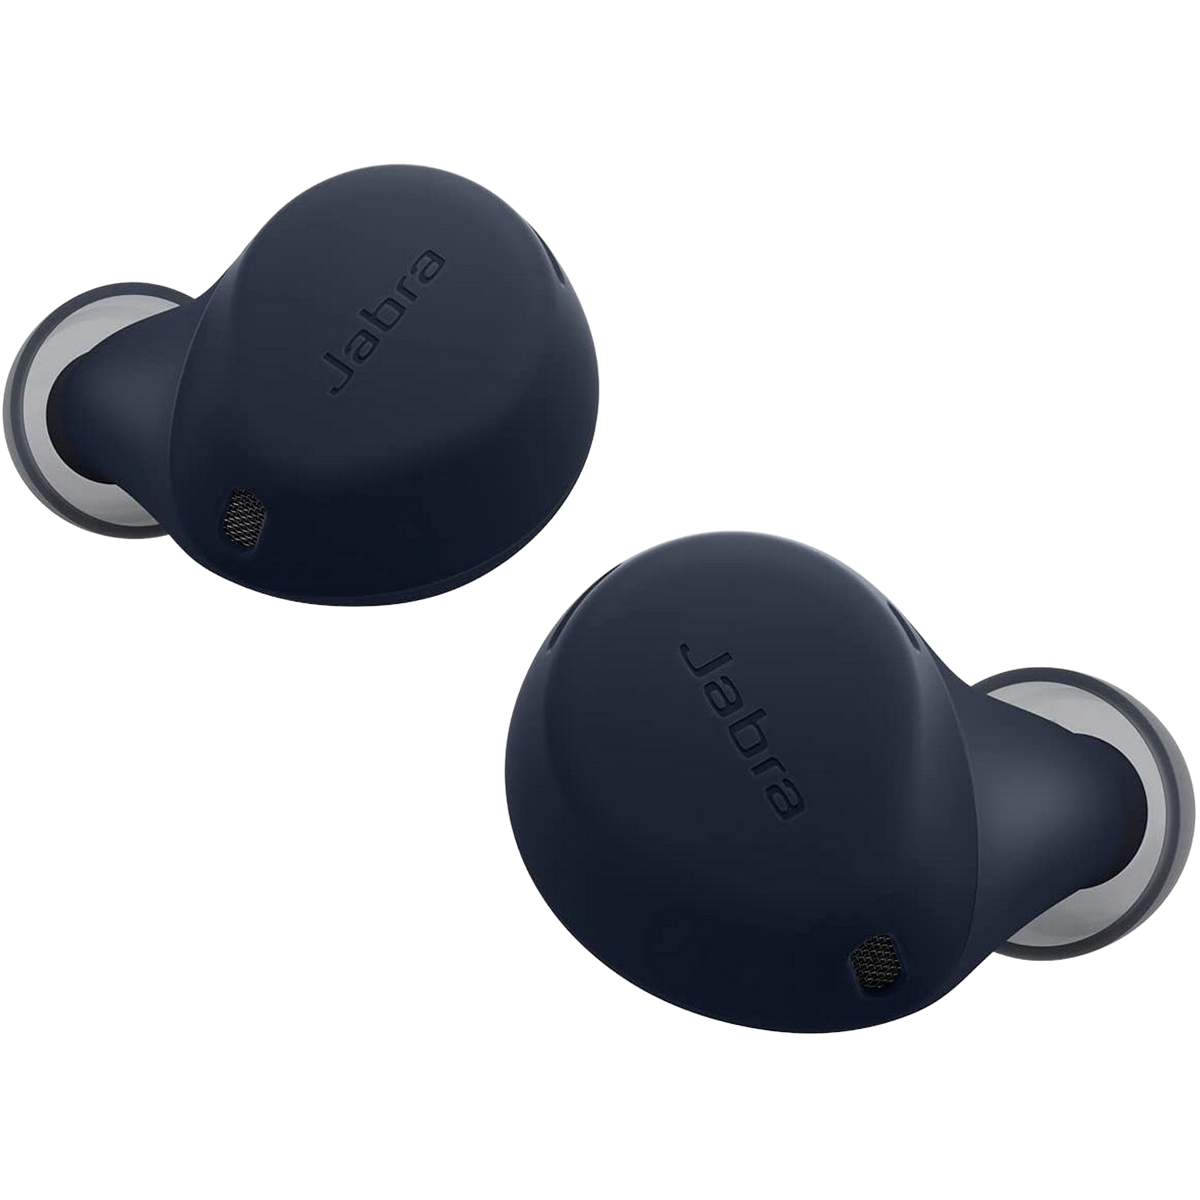 Navy ELITE 7 In-ear Kopfhörer ACTIVE Bluetooth 100-99171002-60 JABRA NA,